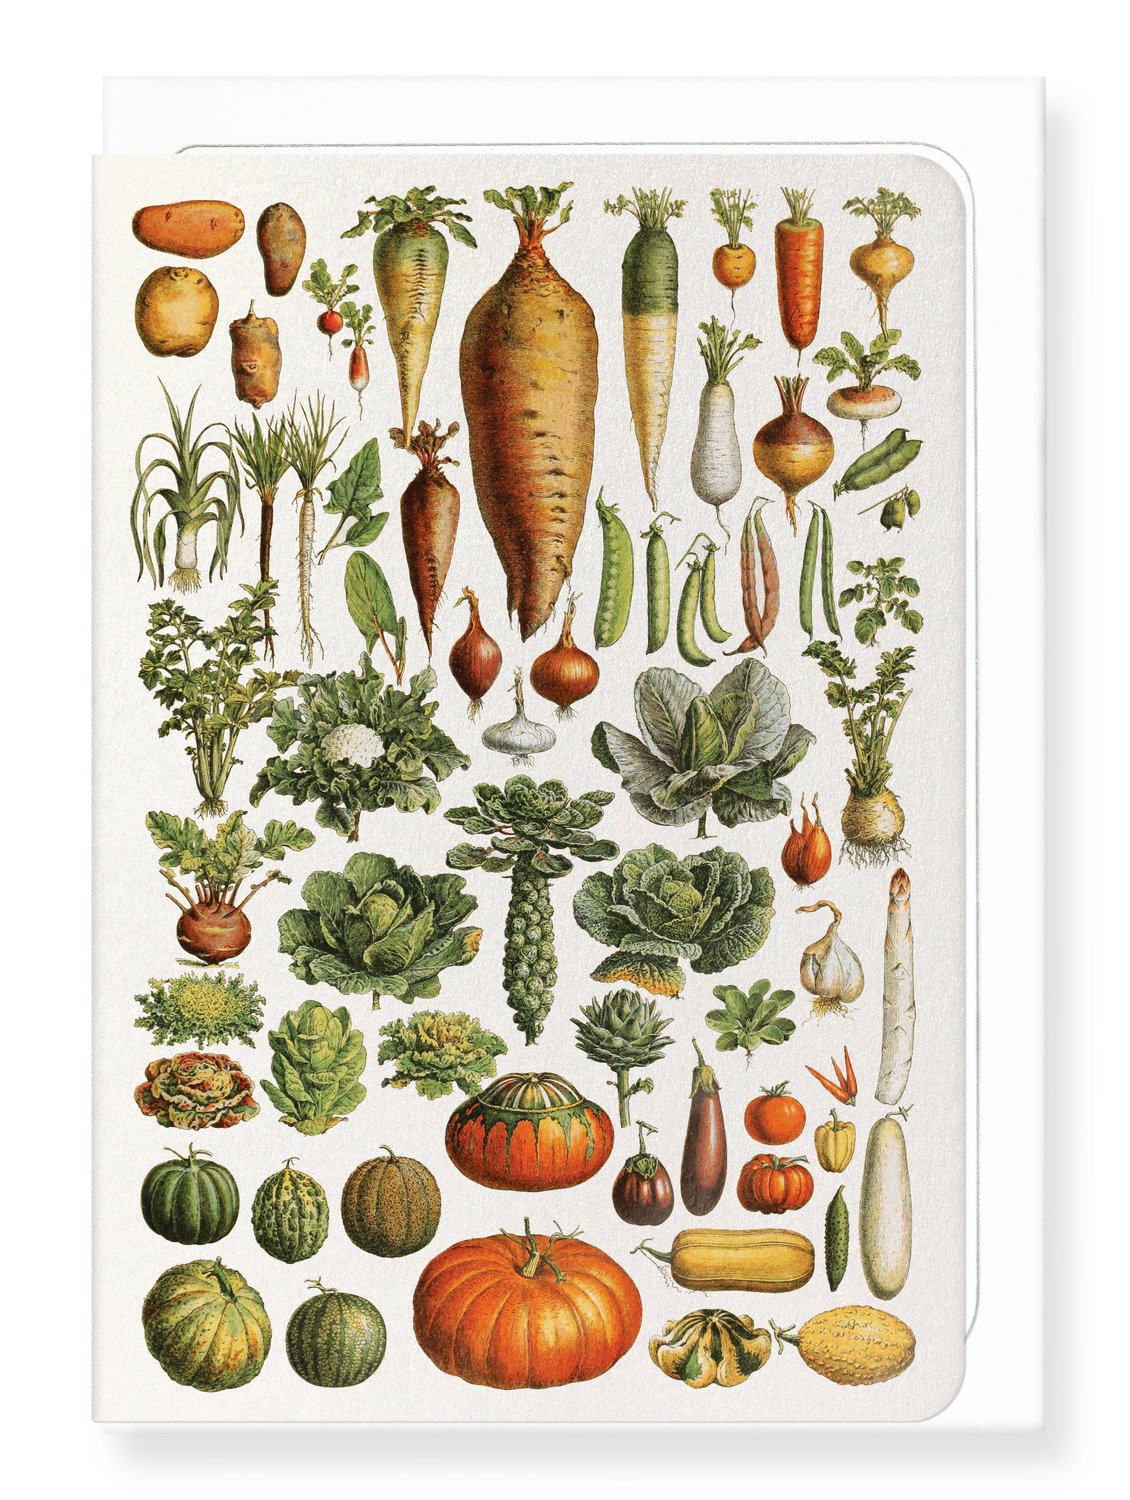 Ezen Designs - Garden Vegetables (1922) - Greeting Card - Front